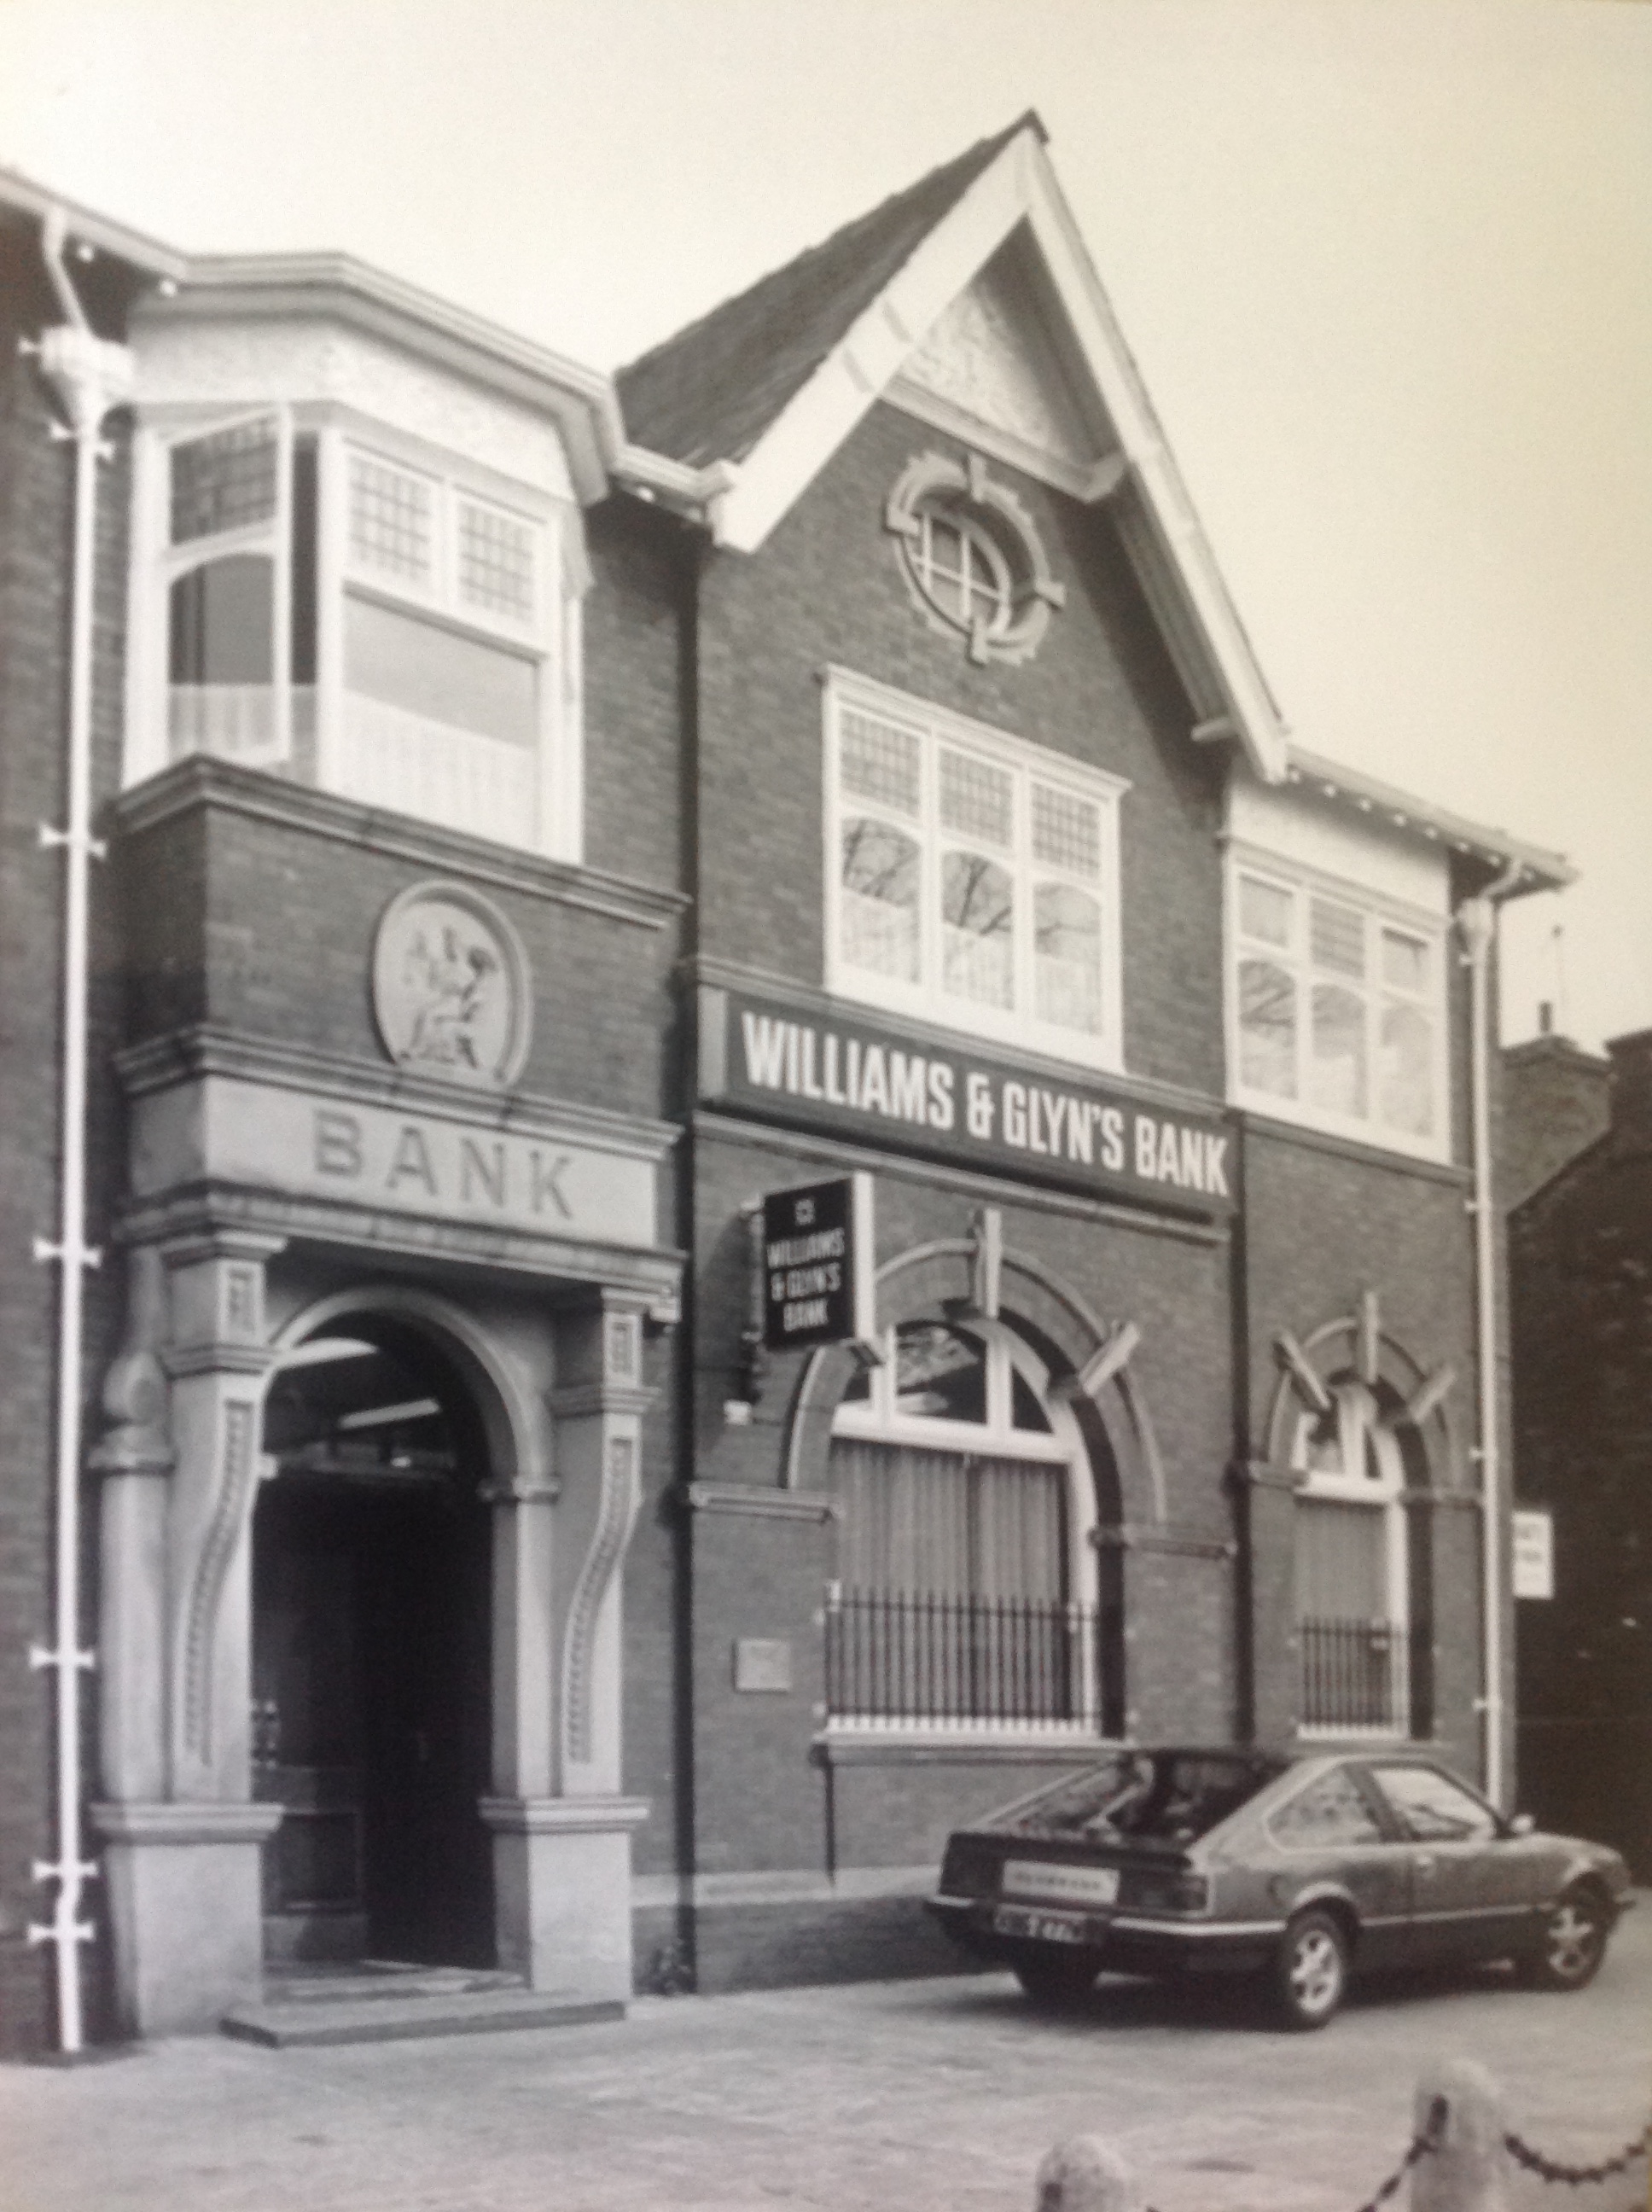 Williams & Glyn's Bank in Birkdale Village in the 1980s.